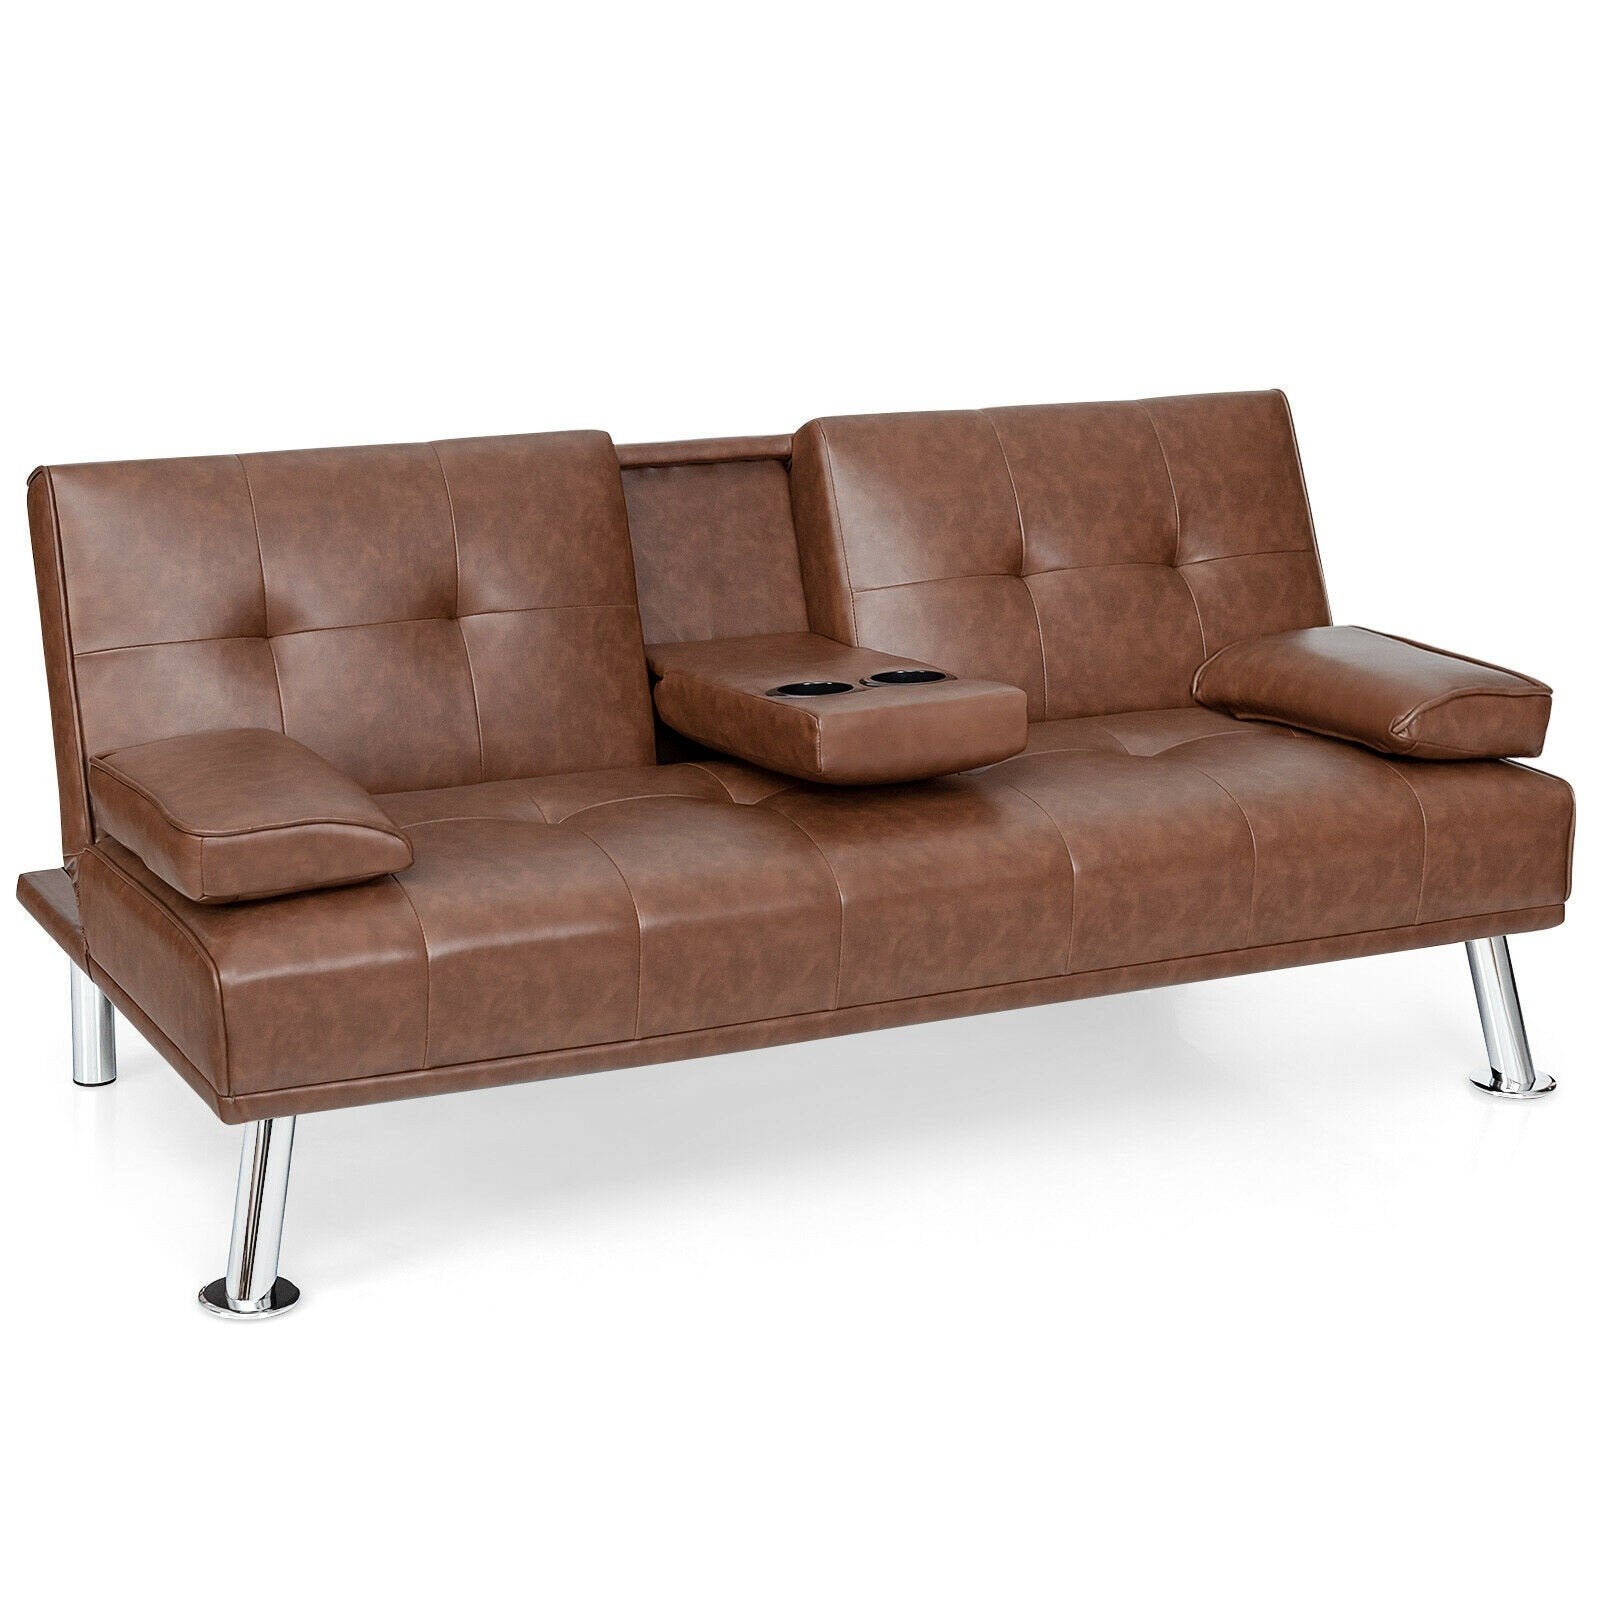 Giantex Modern Convertible Futon Sofa Bed,2 Cup Holders, Backrest Adjustable